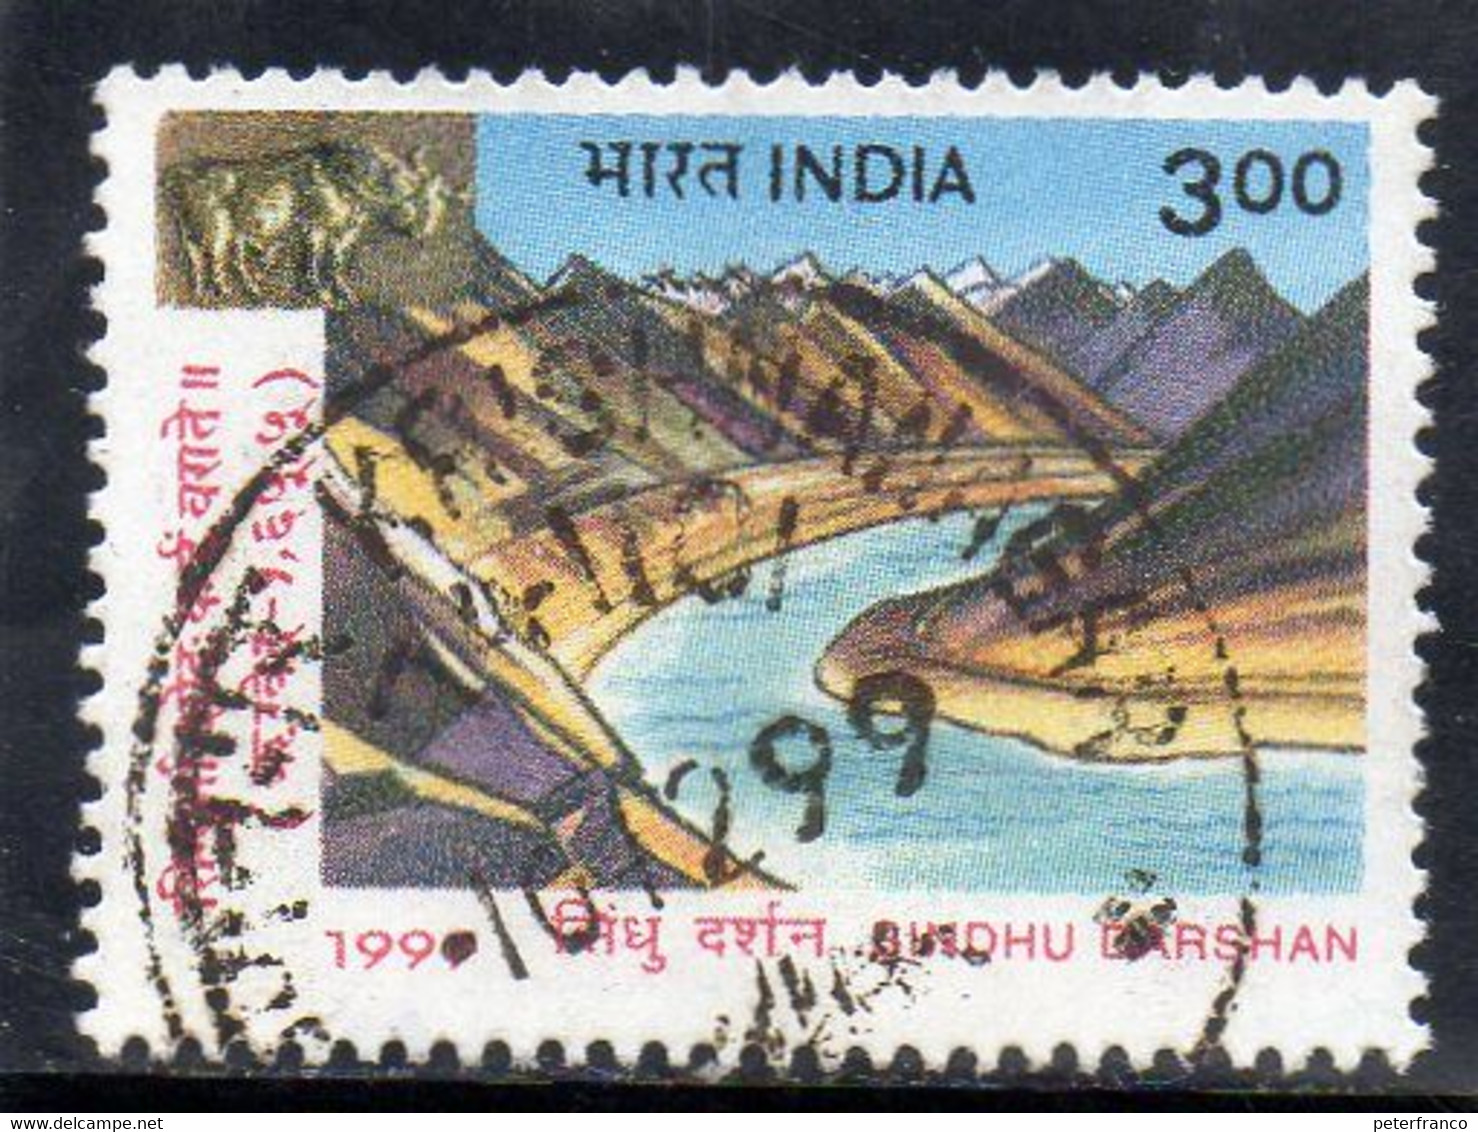 1999 India - Sindhu Darshan Festival - Usados